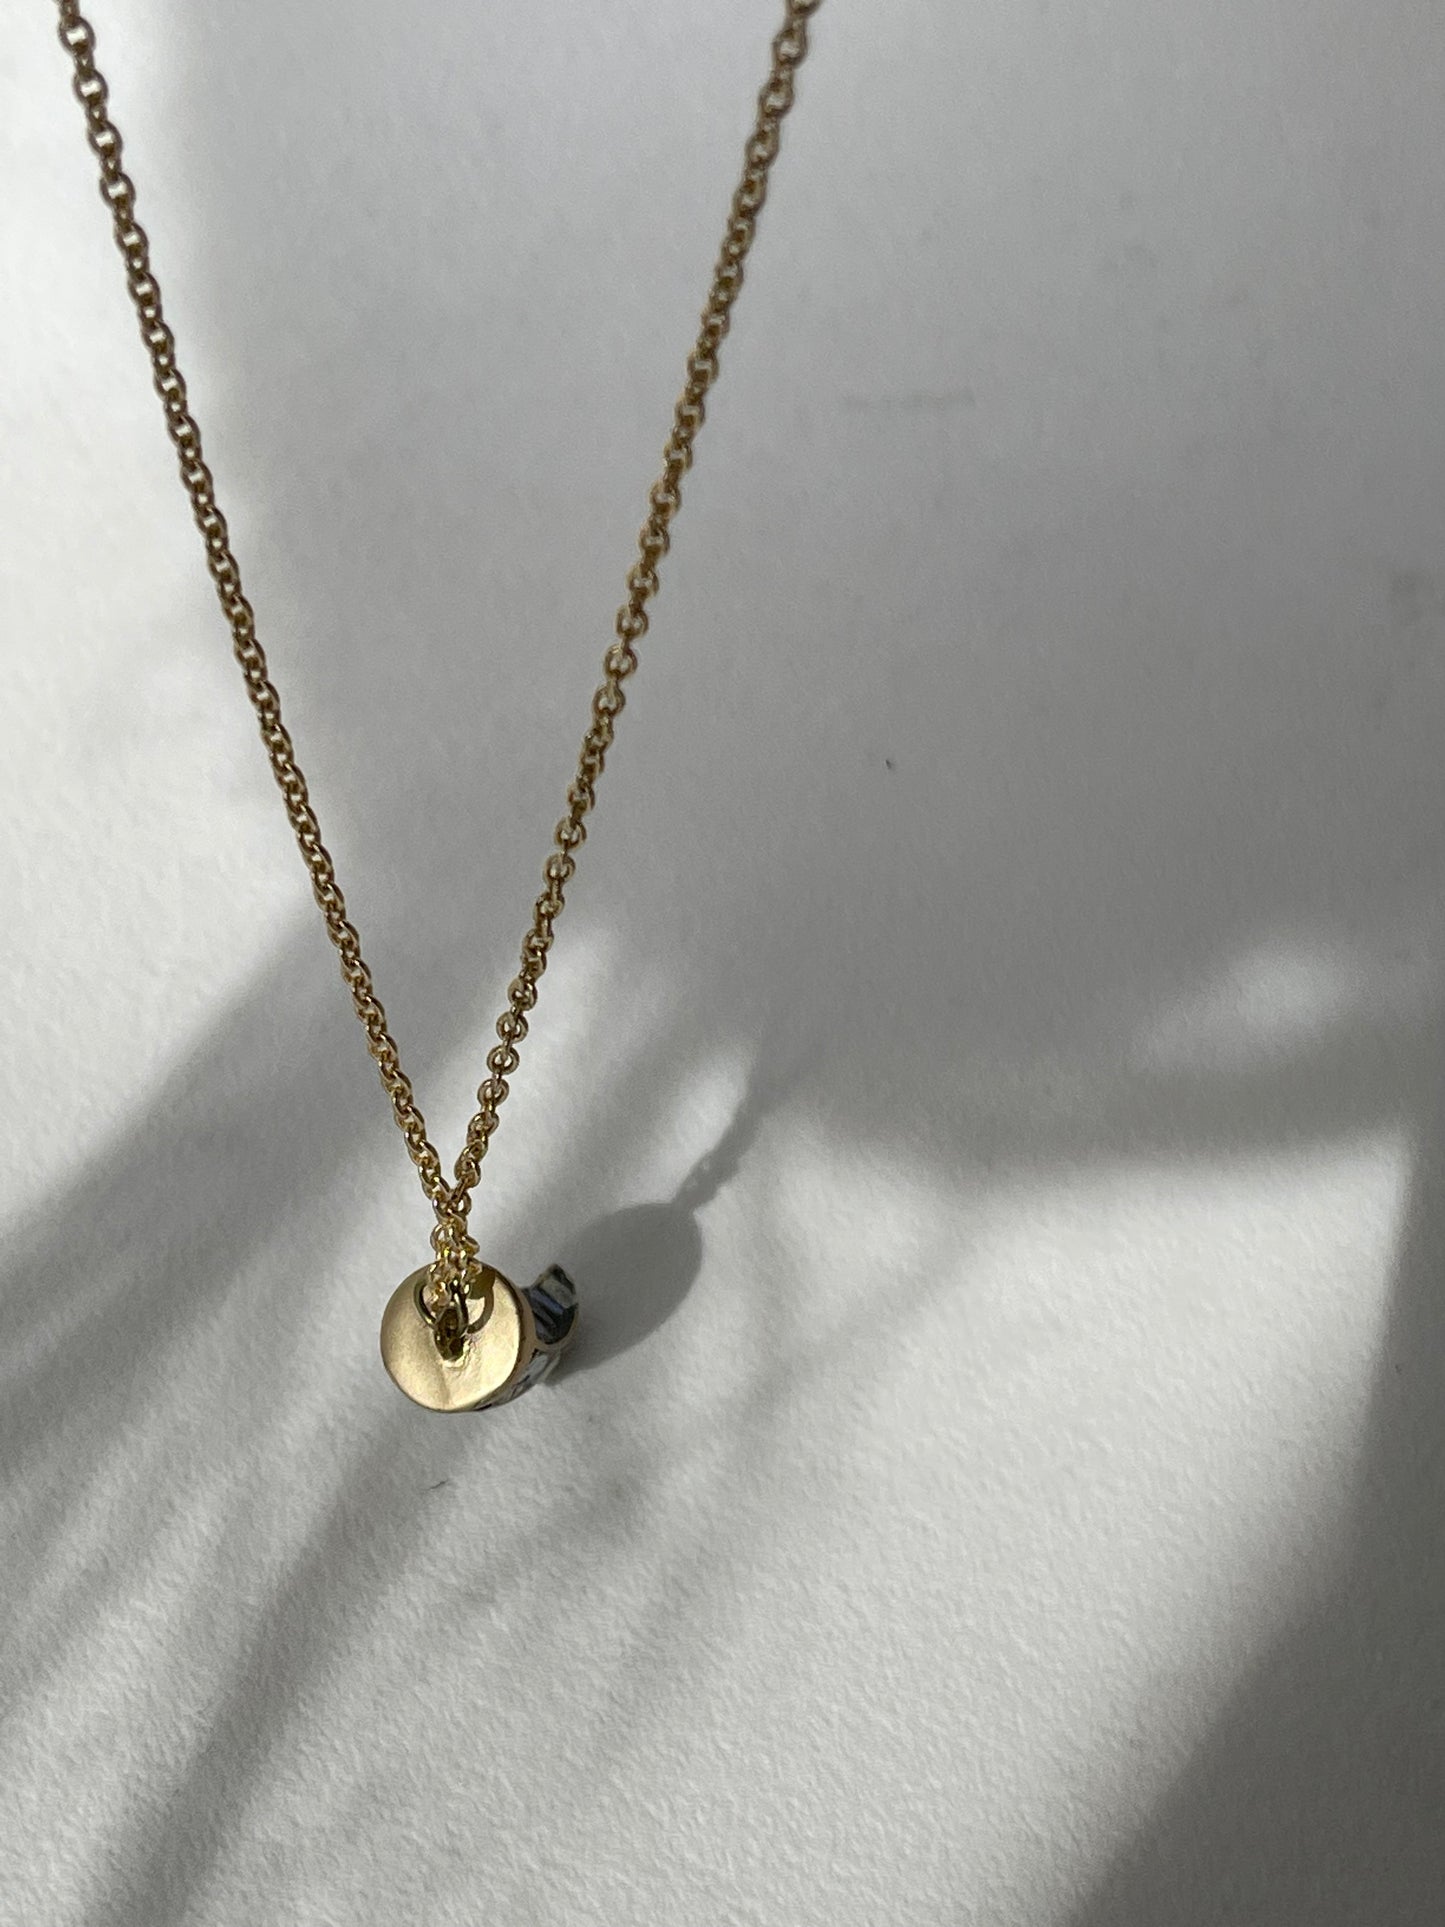 Allen Artisan Horn & Stone Necklace In Aqua Gold